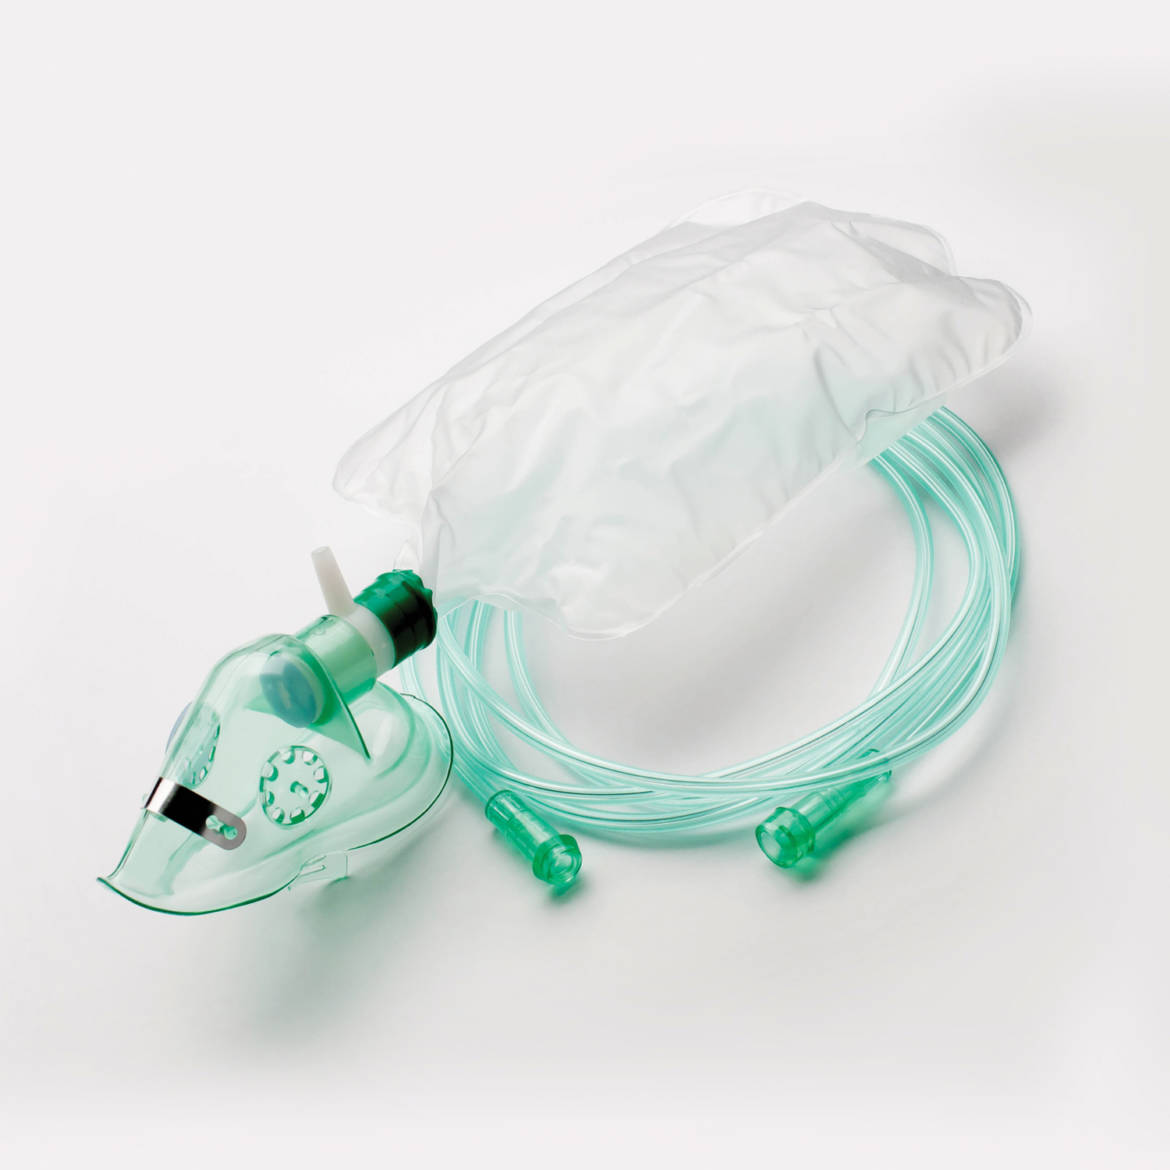 oxygen-mask-with-bag-d.jpg